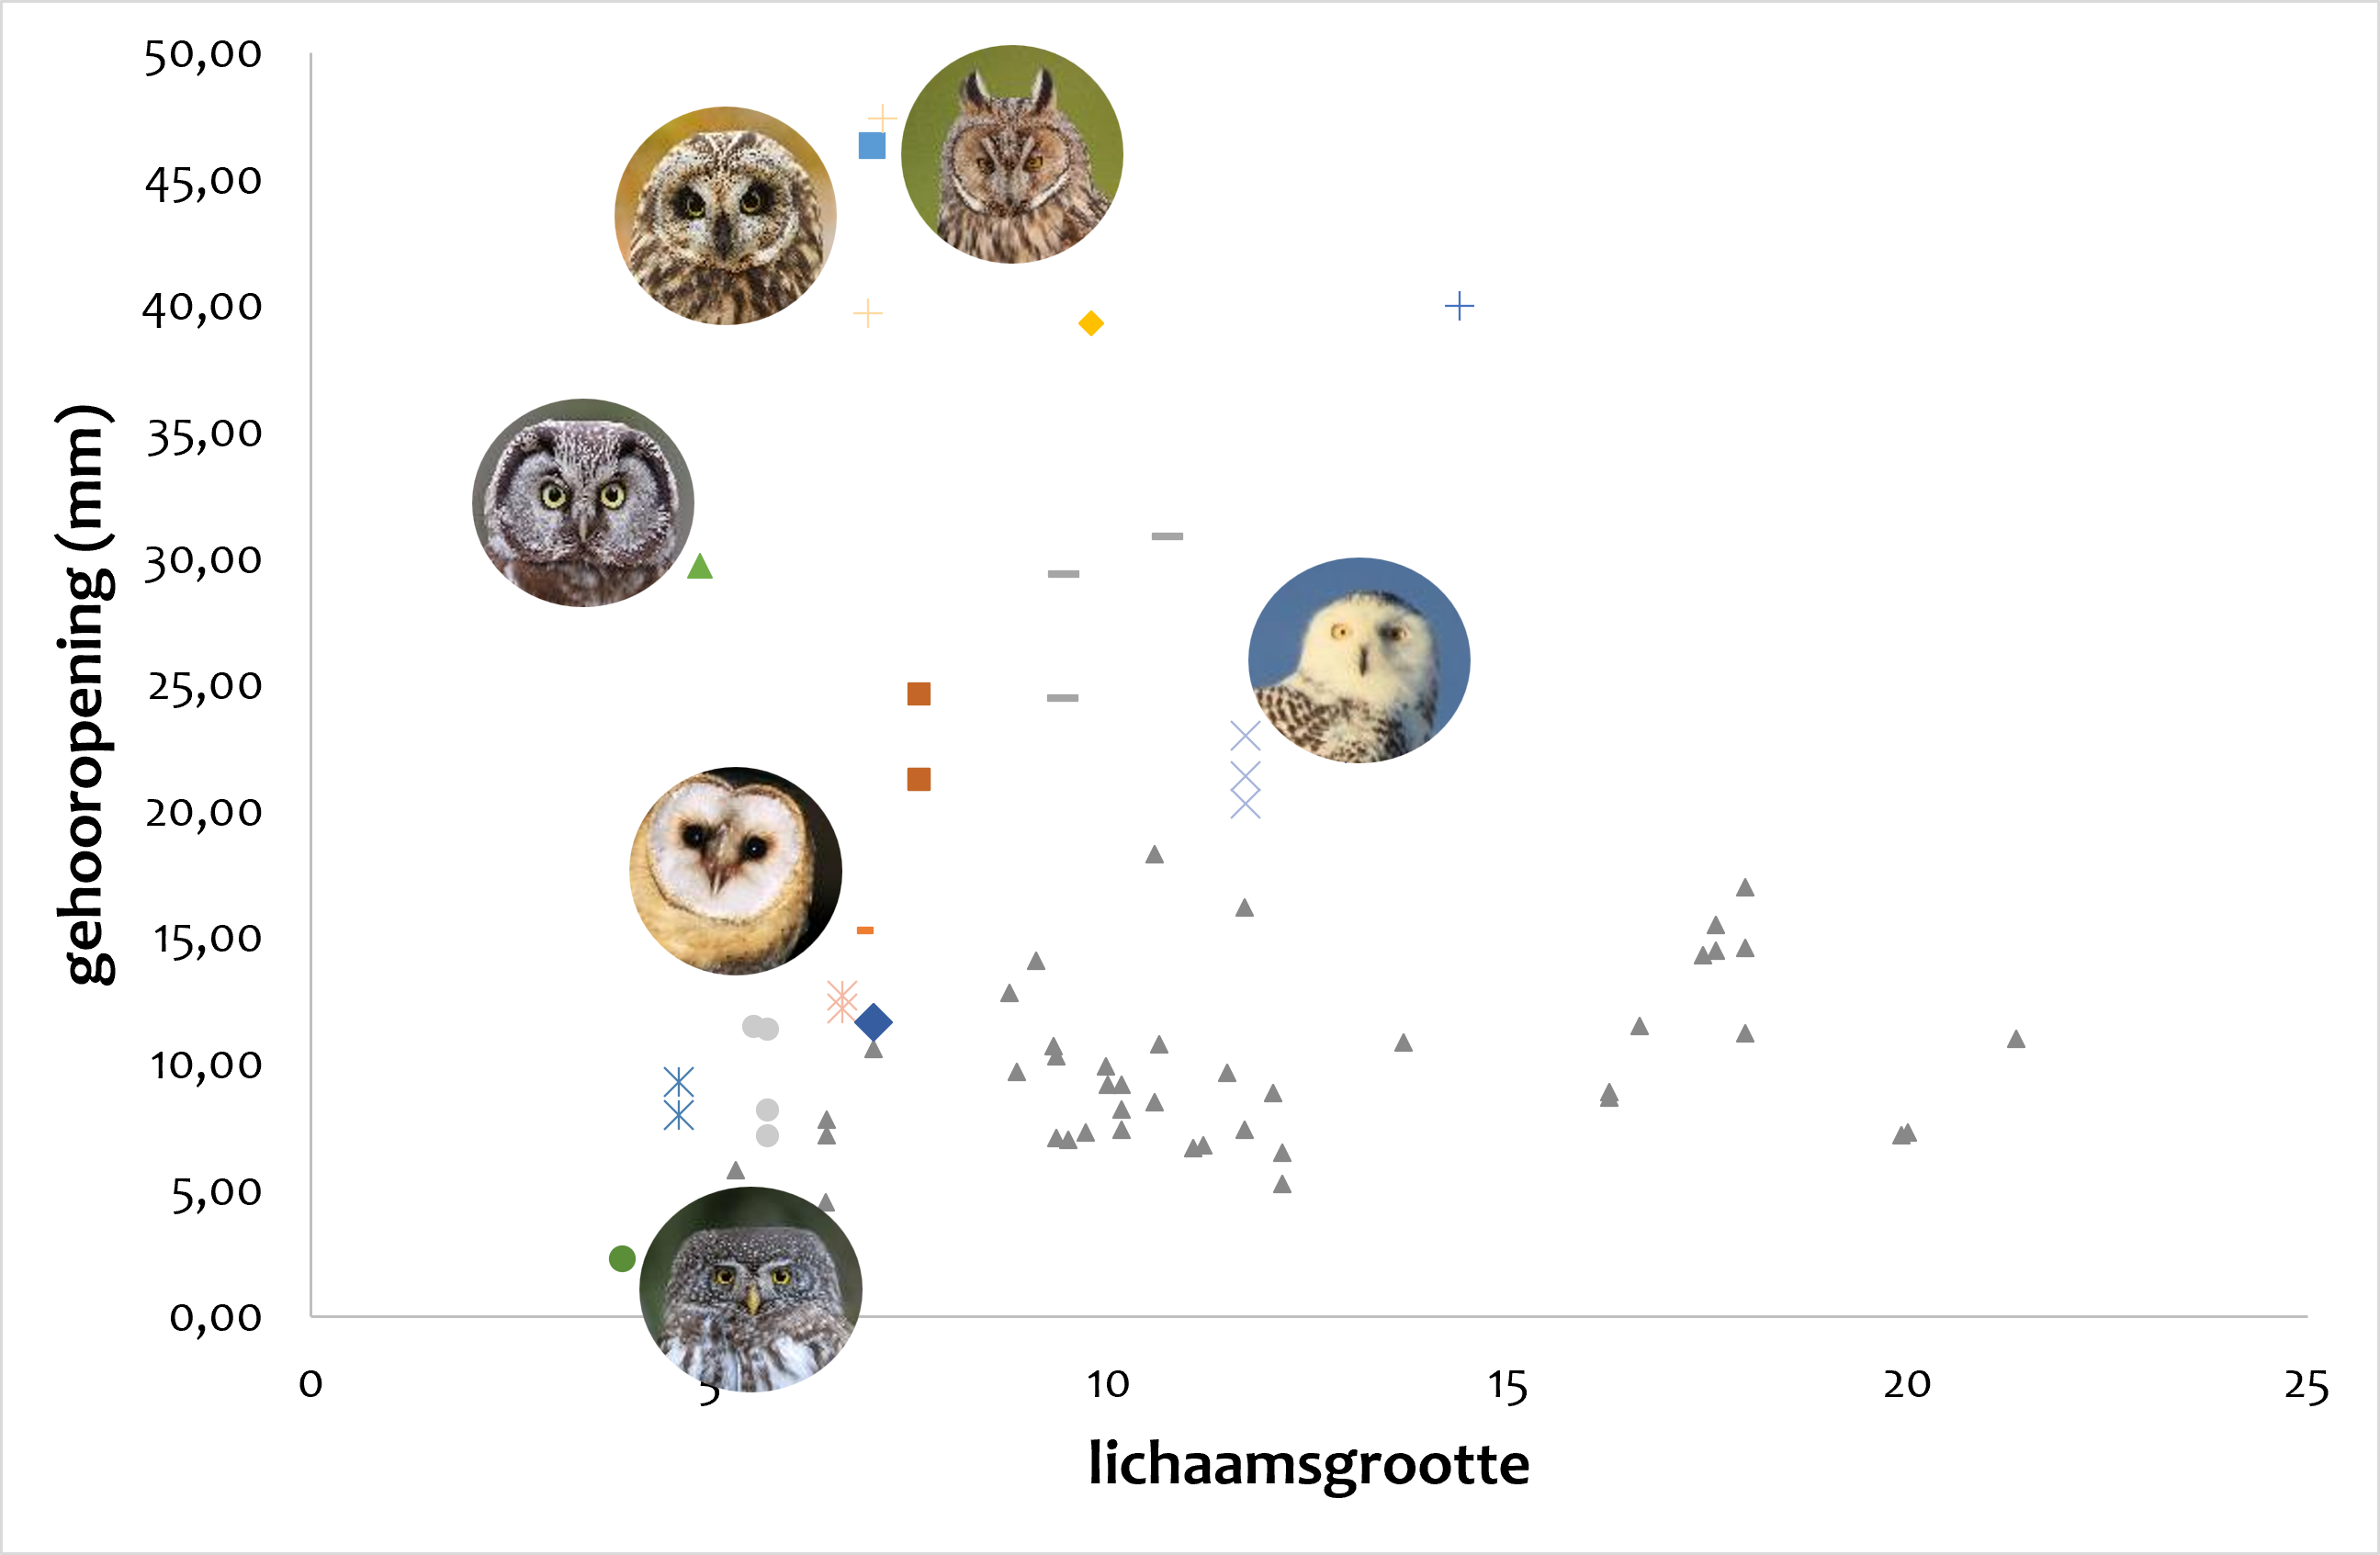 ear slit size variation among European owls